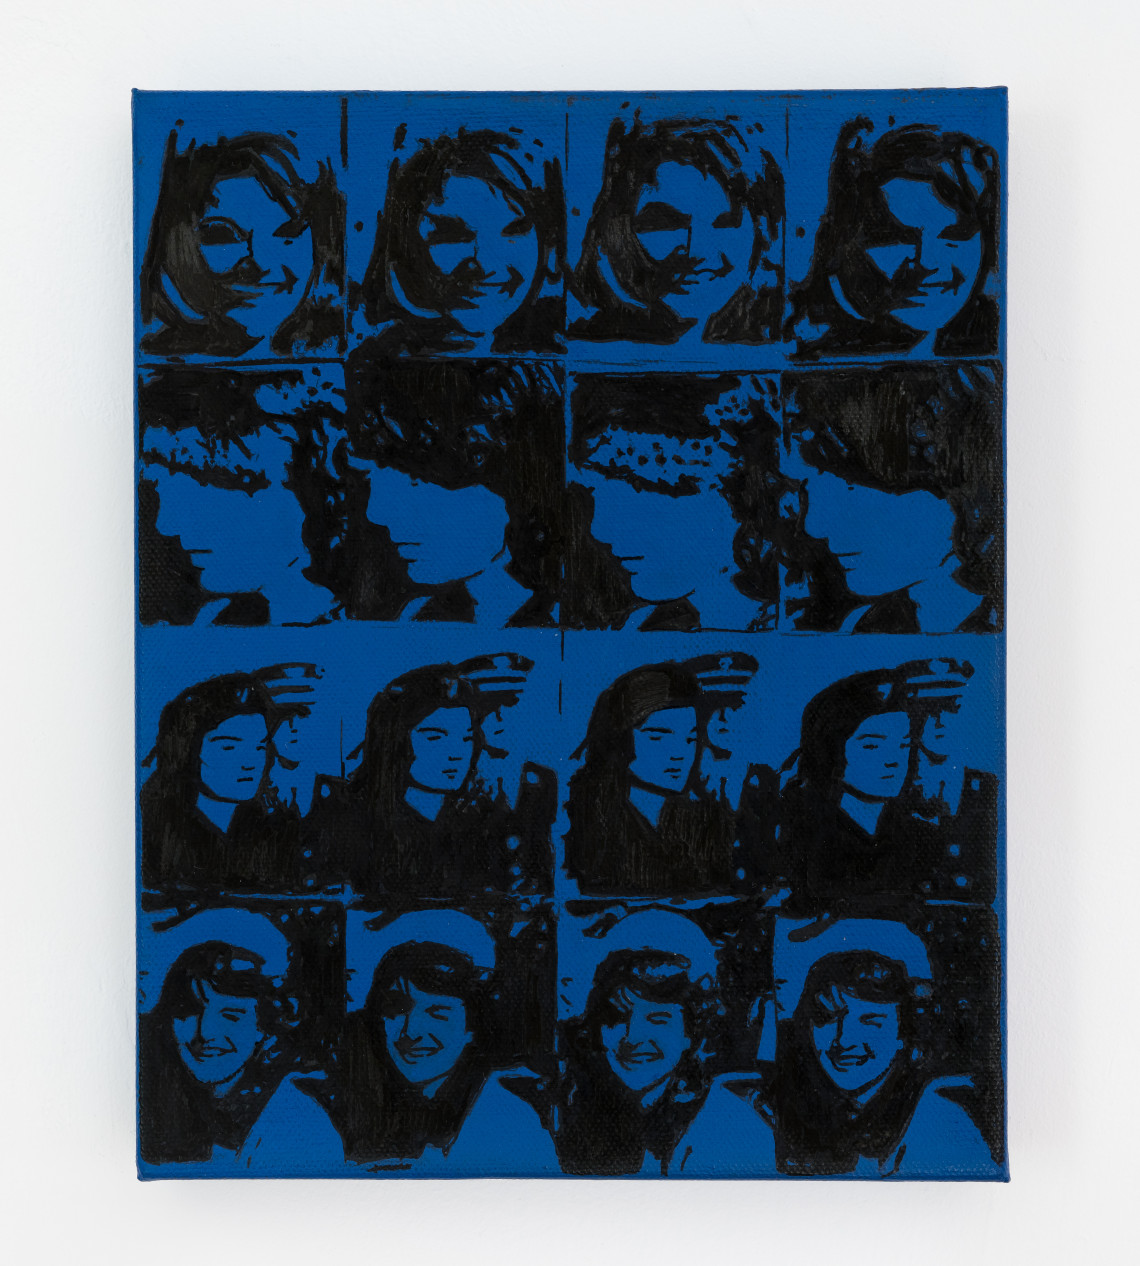  - Richard Pettibone Andy Warhol Sixteen Jackies 1964 1996